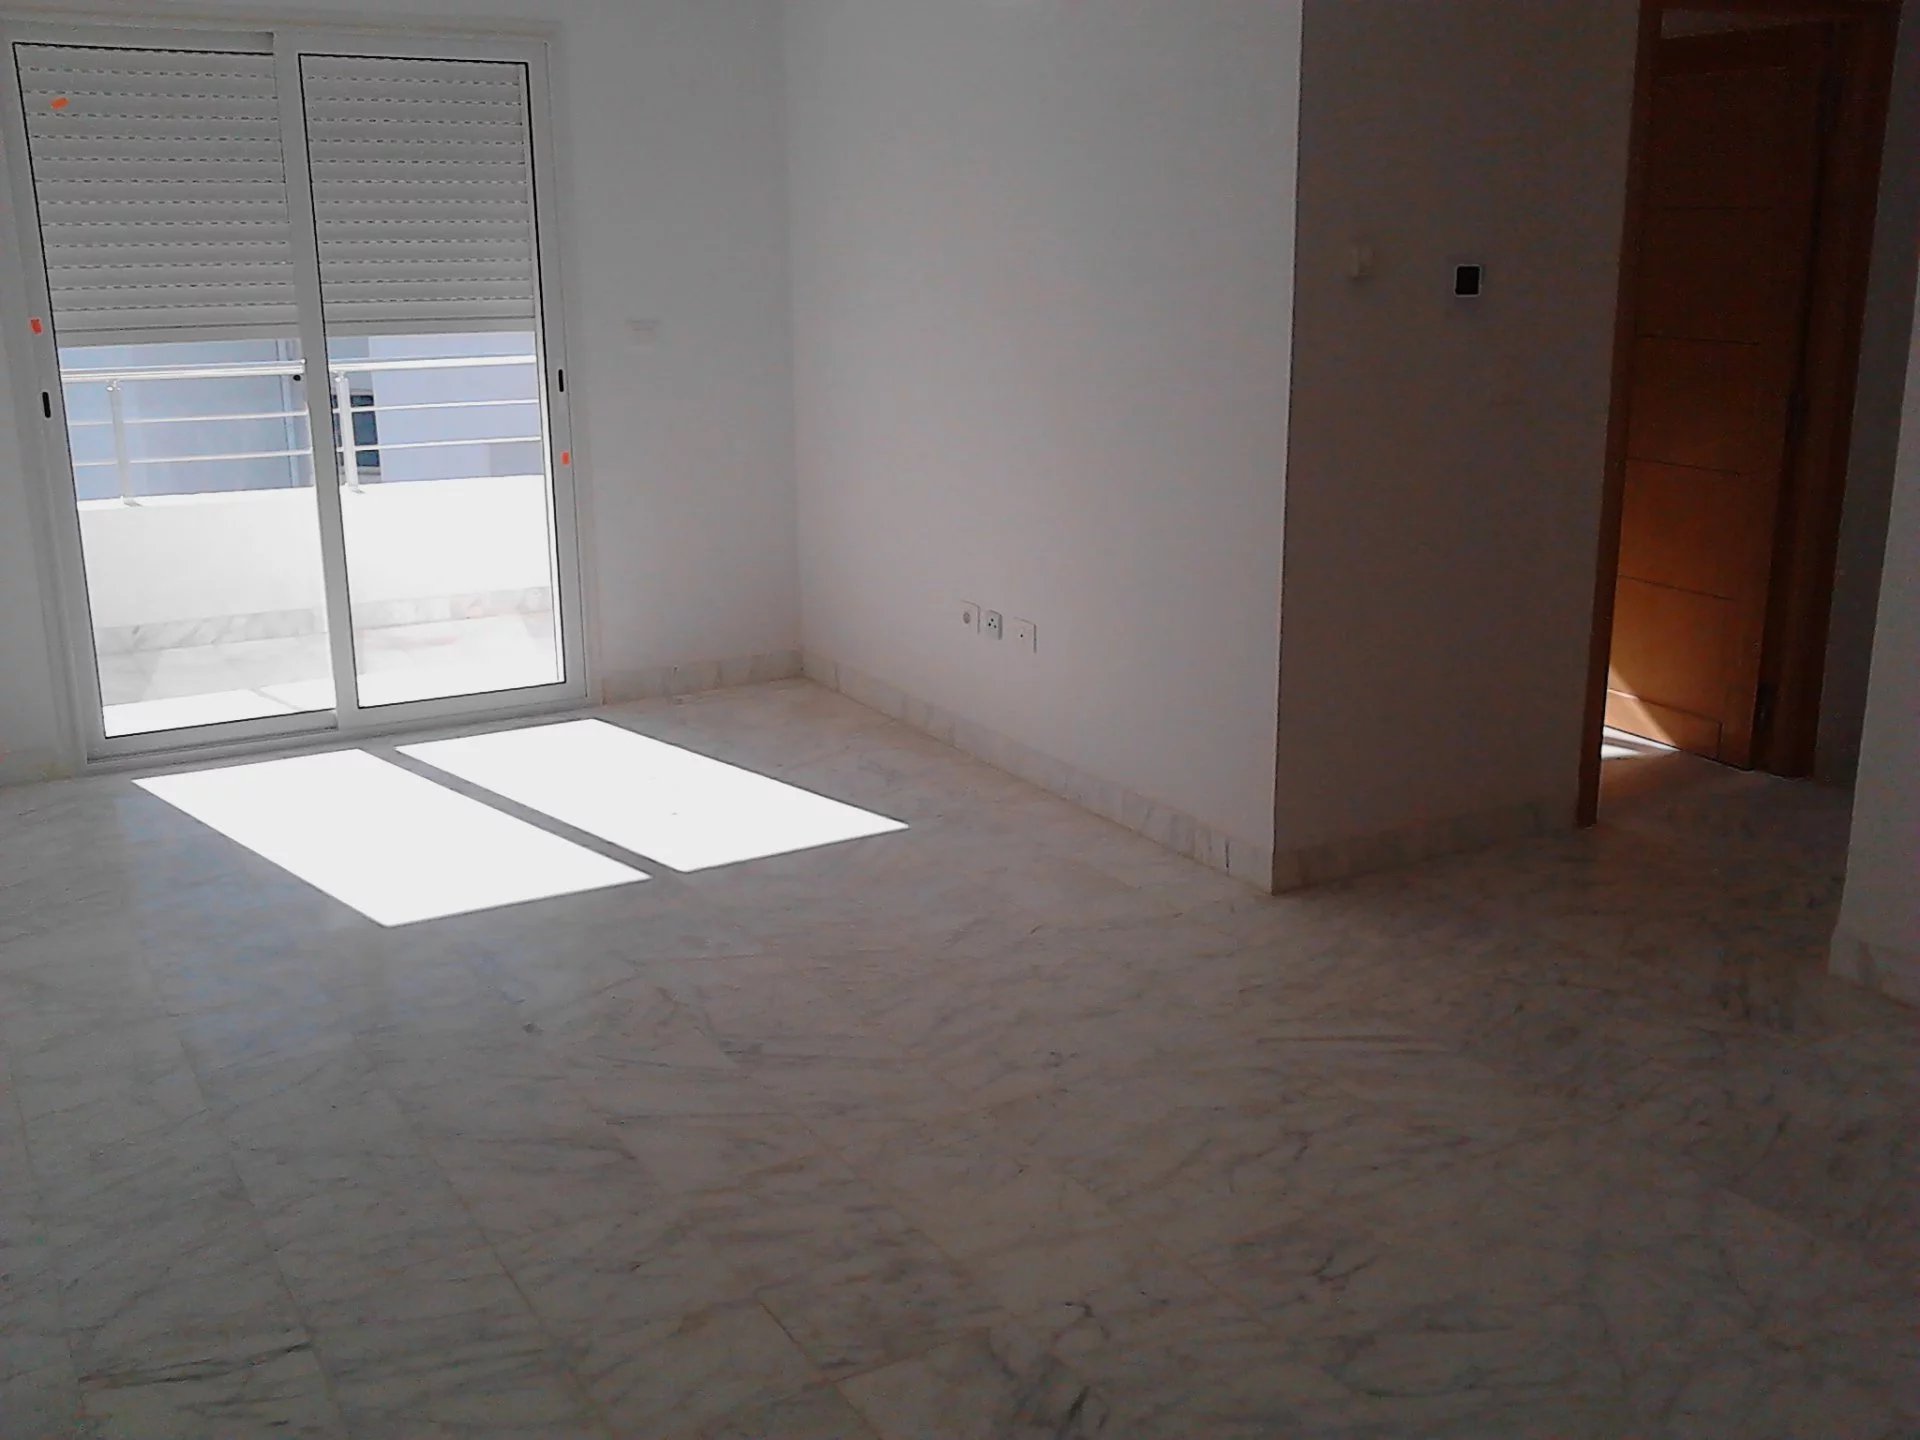 Sale Apartment - Ariana - Tunisia